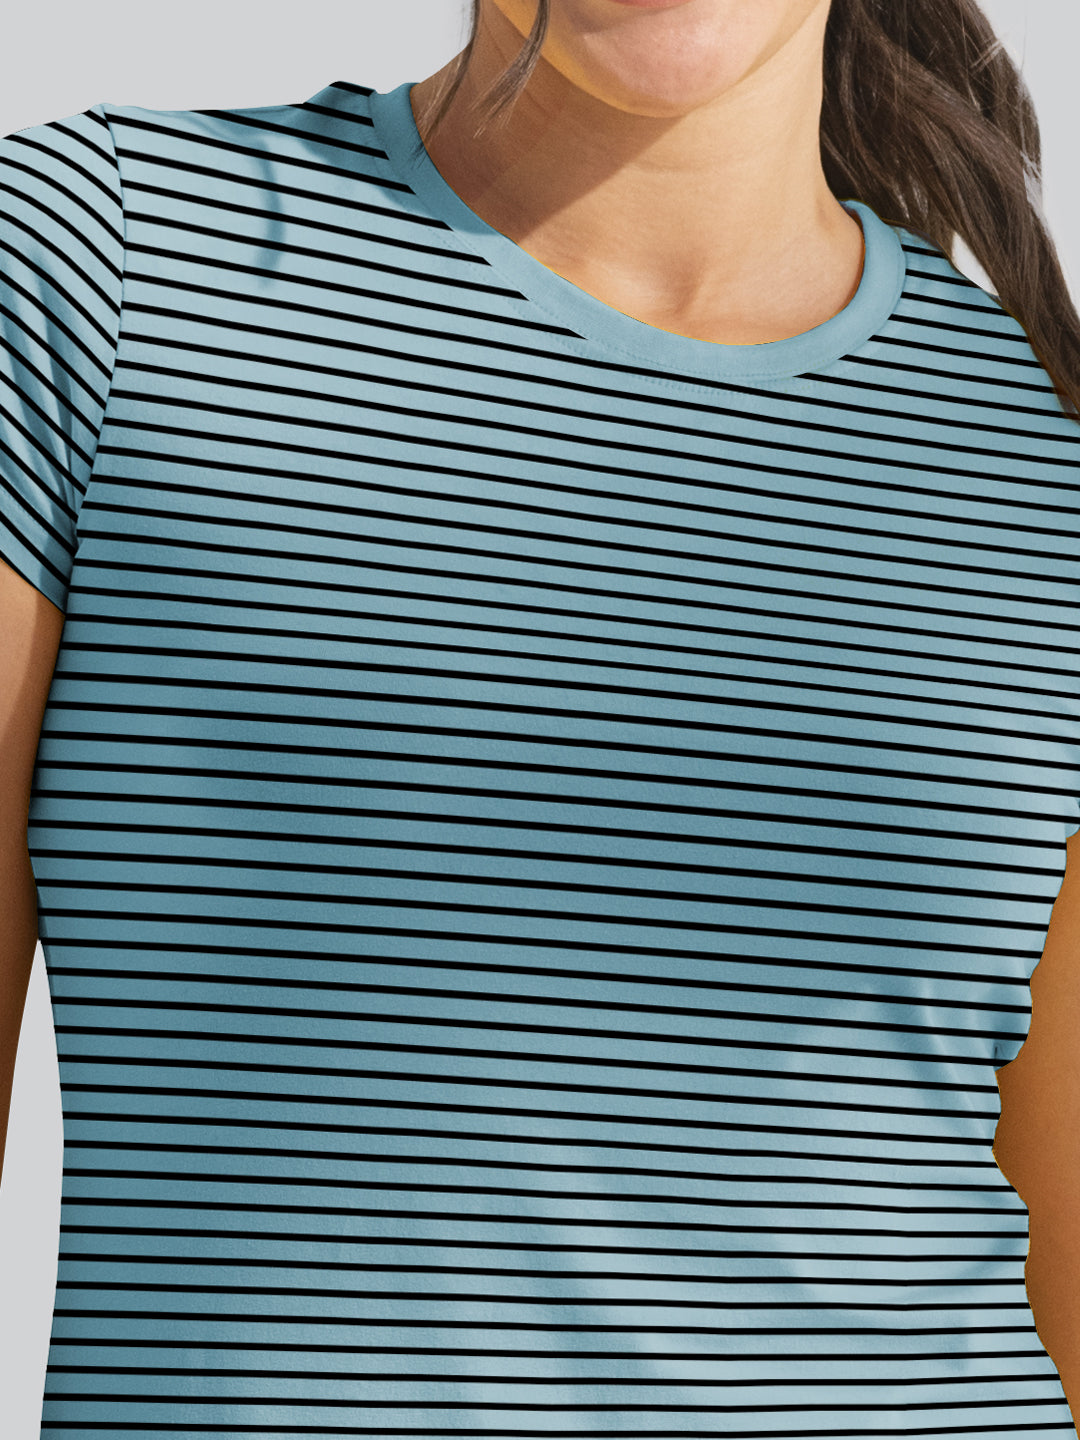 Blue Base with Black Stripes Round Neck T-Shirt #404